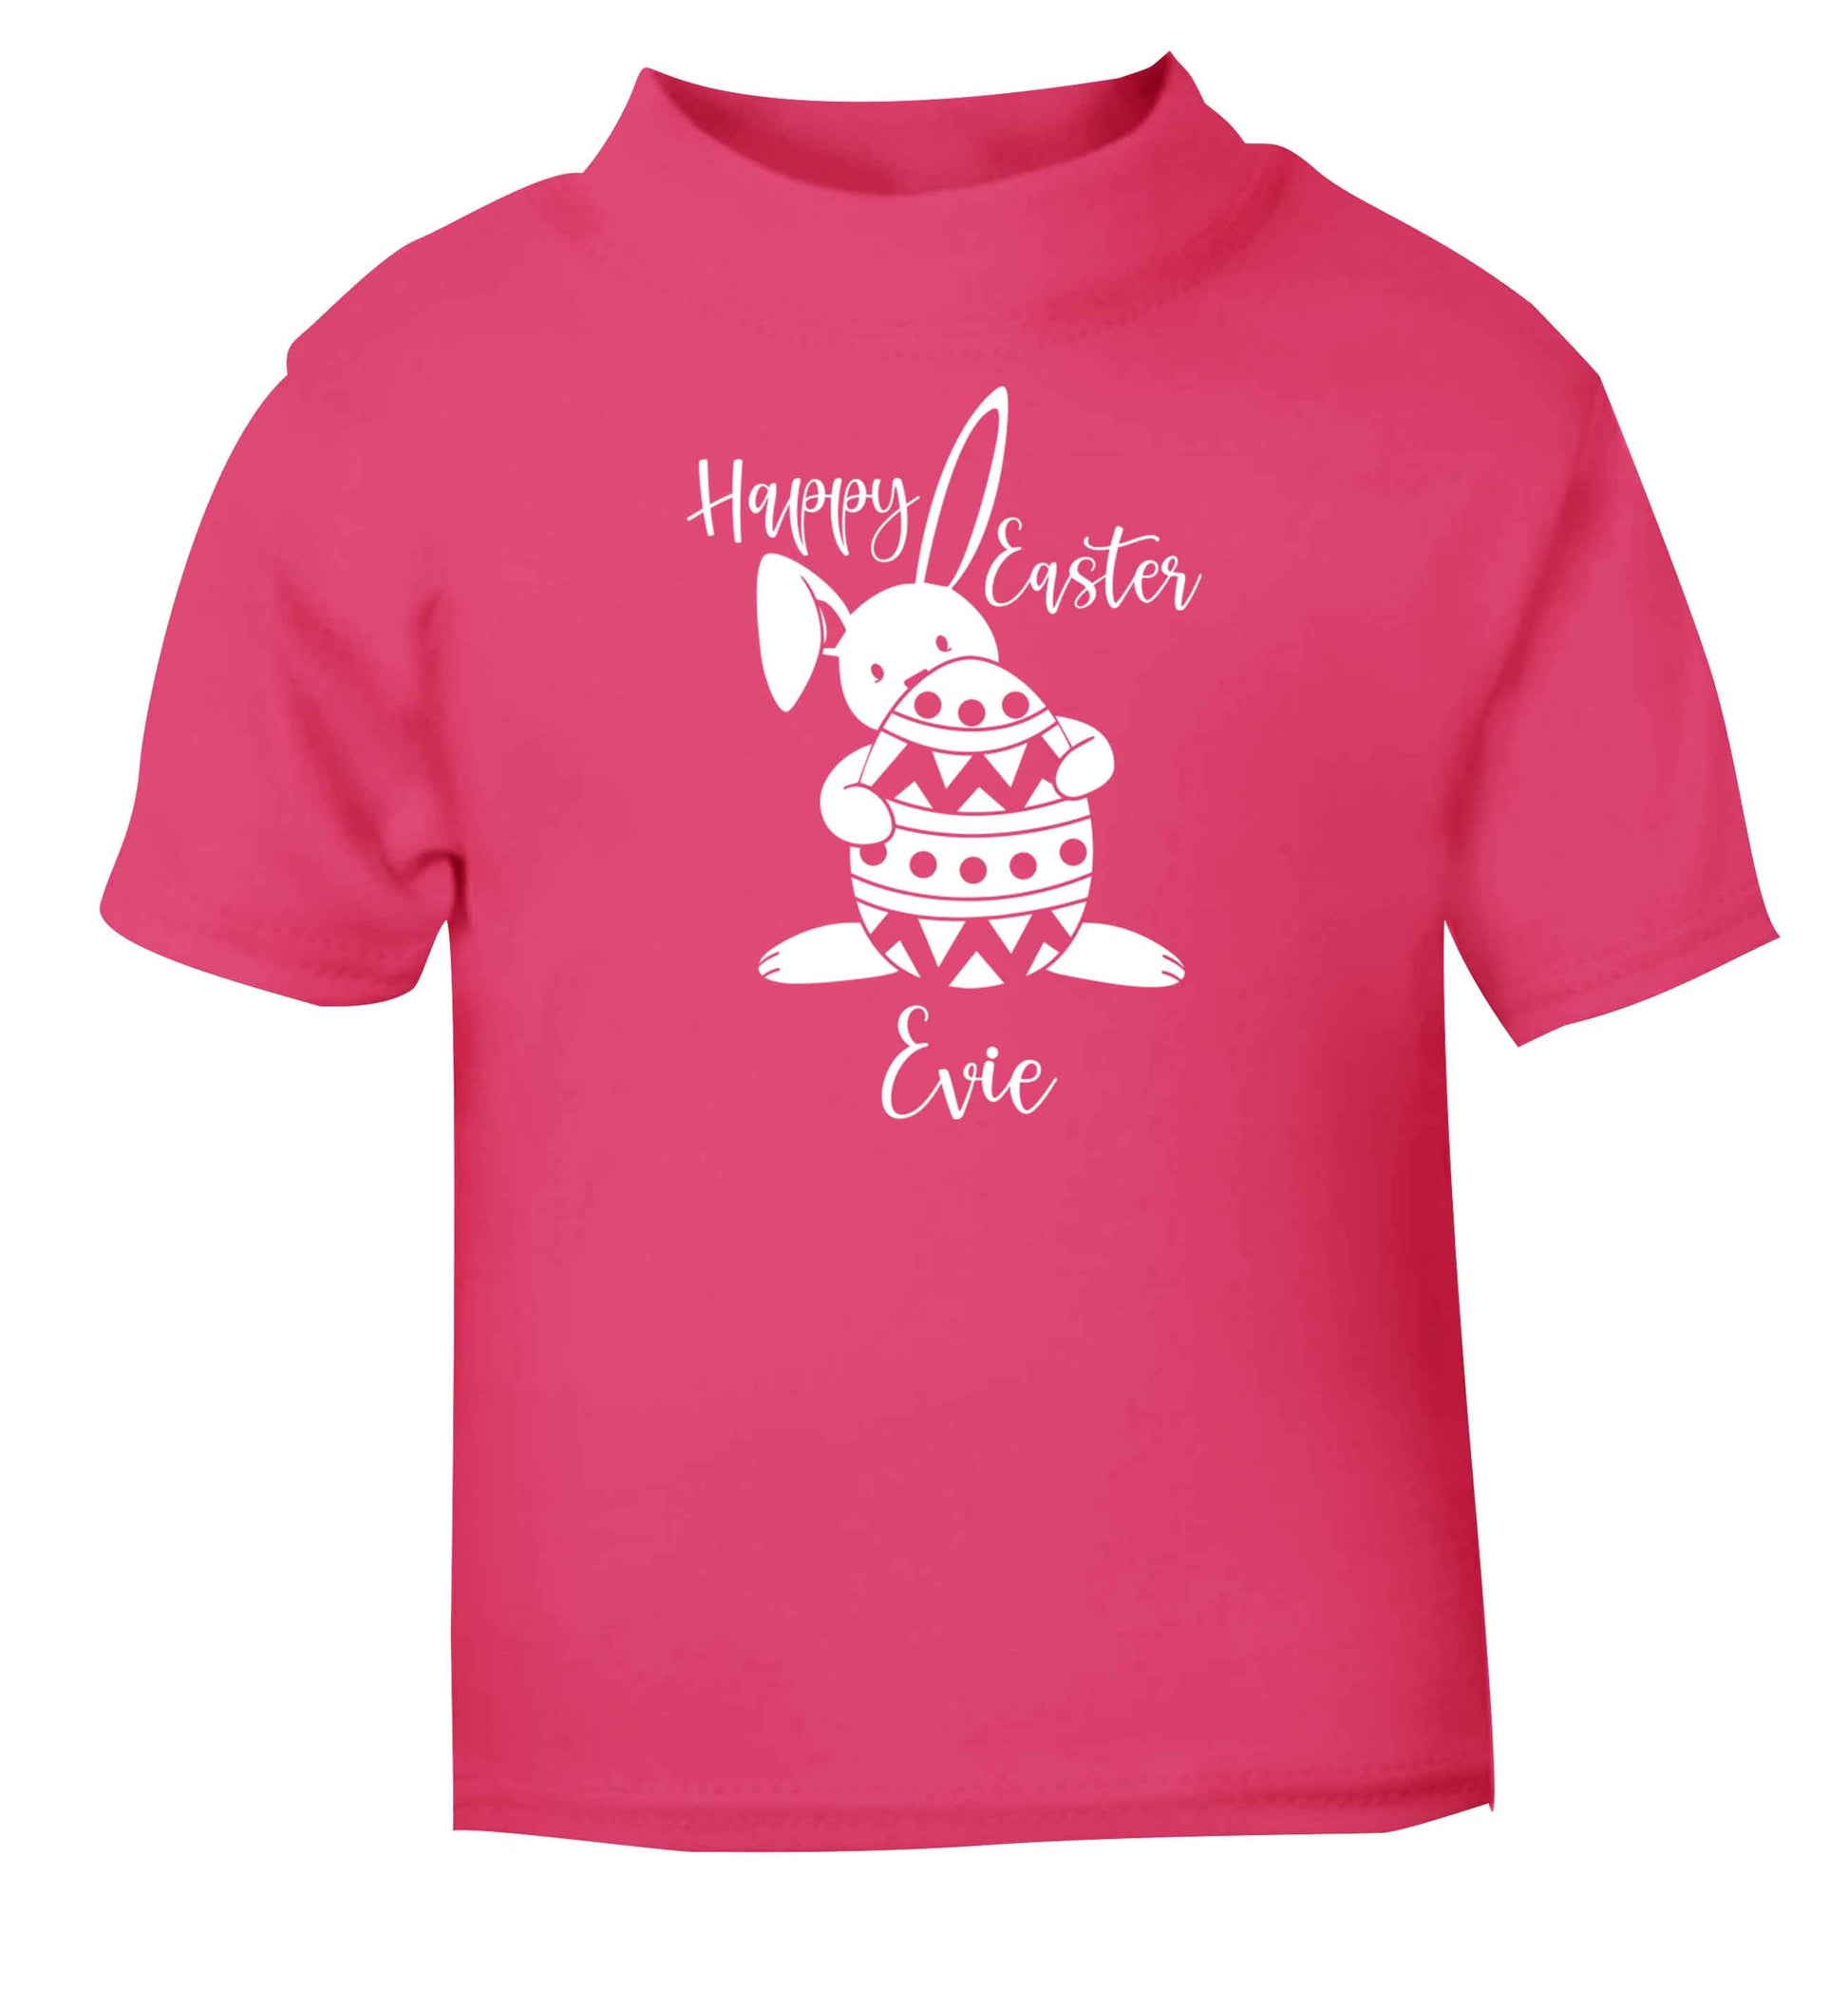 Happy Easter - personalised pink baby toddler Tshirt 2 Years